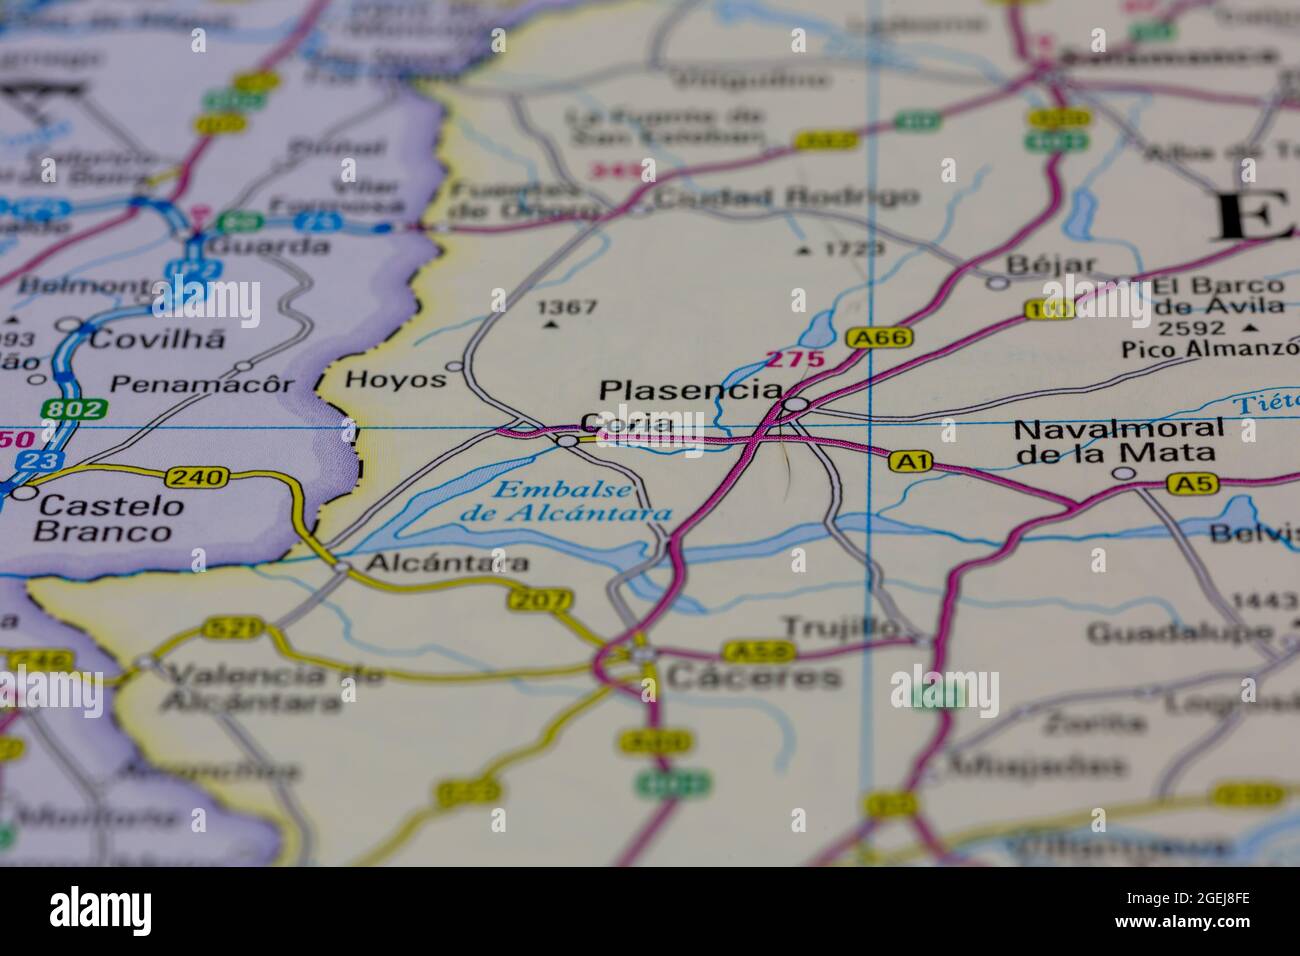 Coria España aparece en un mapa de carreteras o en un mapa geográfico Foto de stock